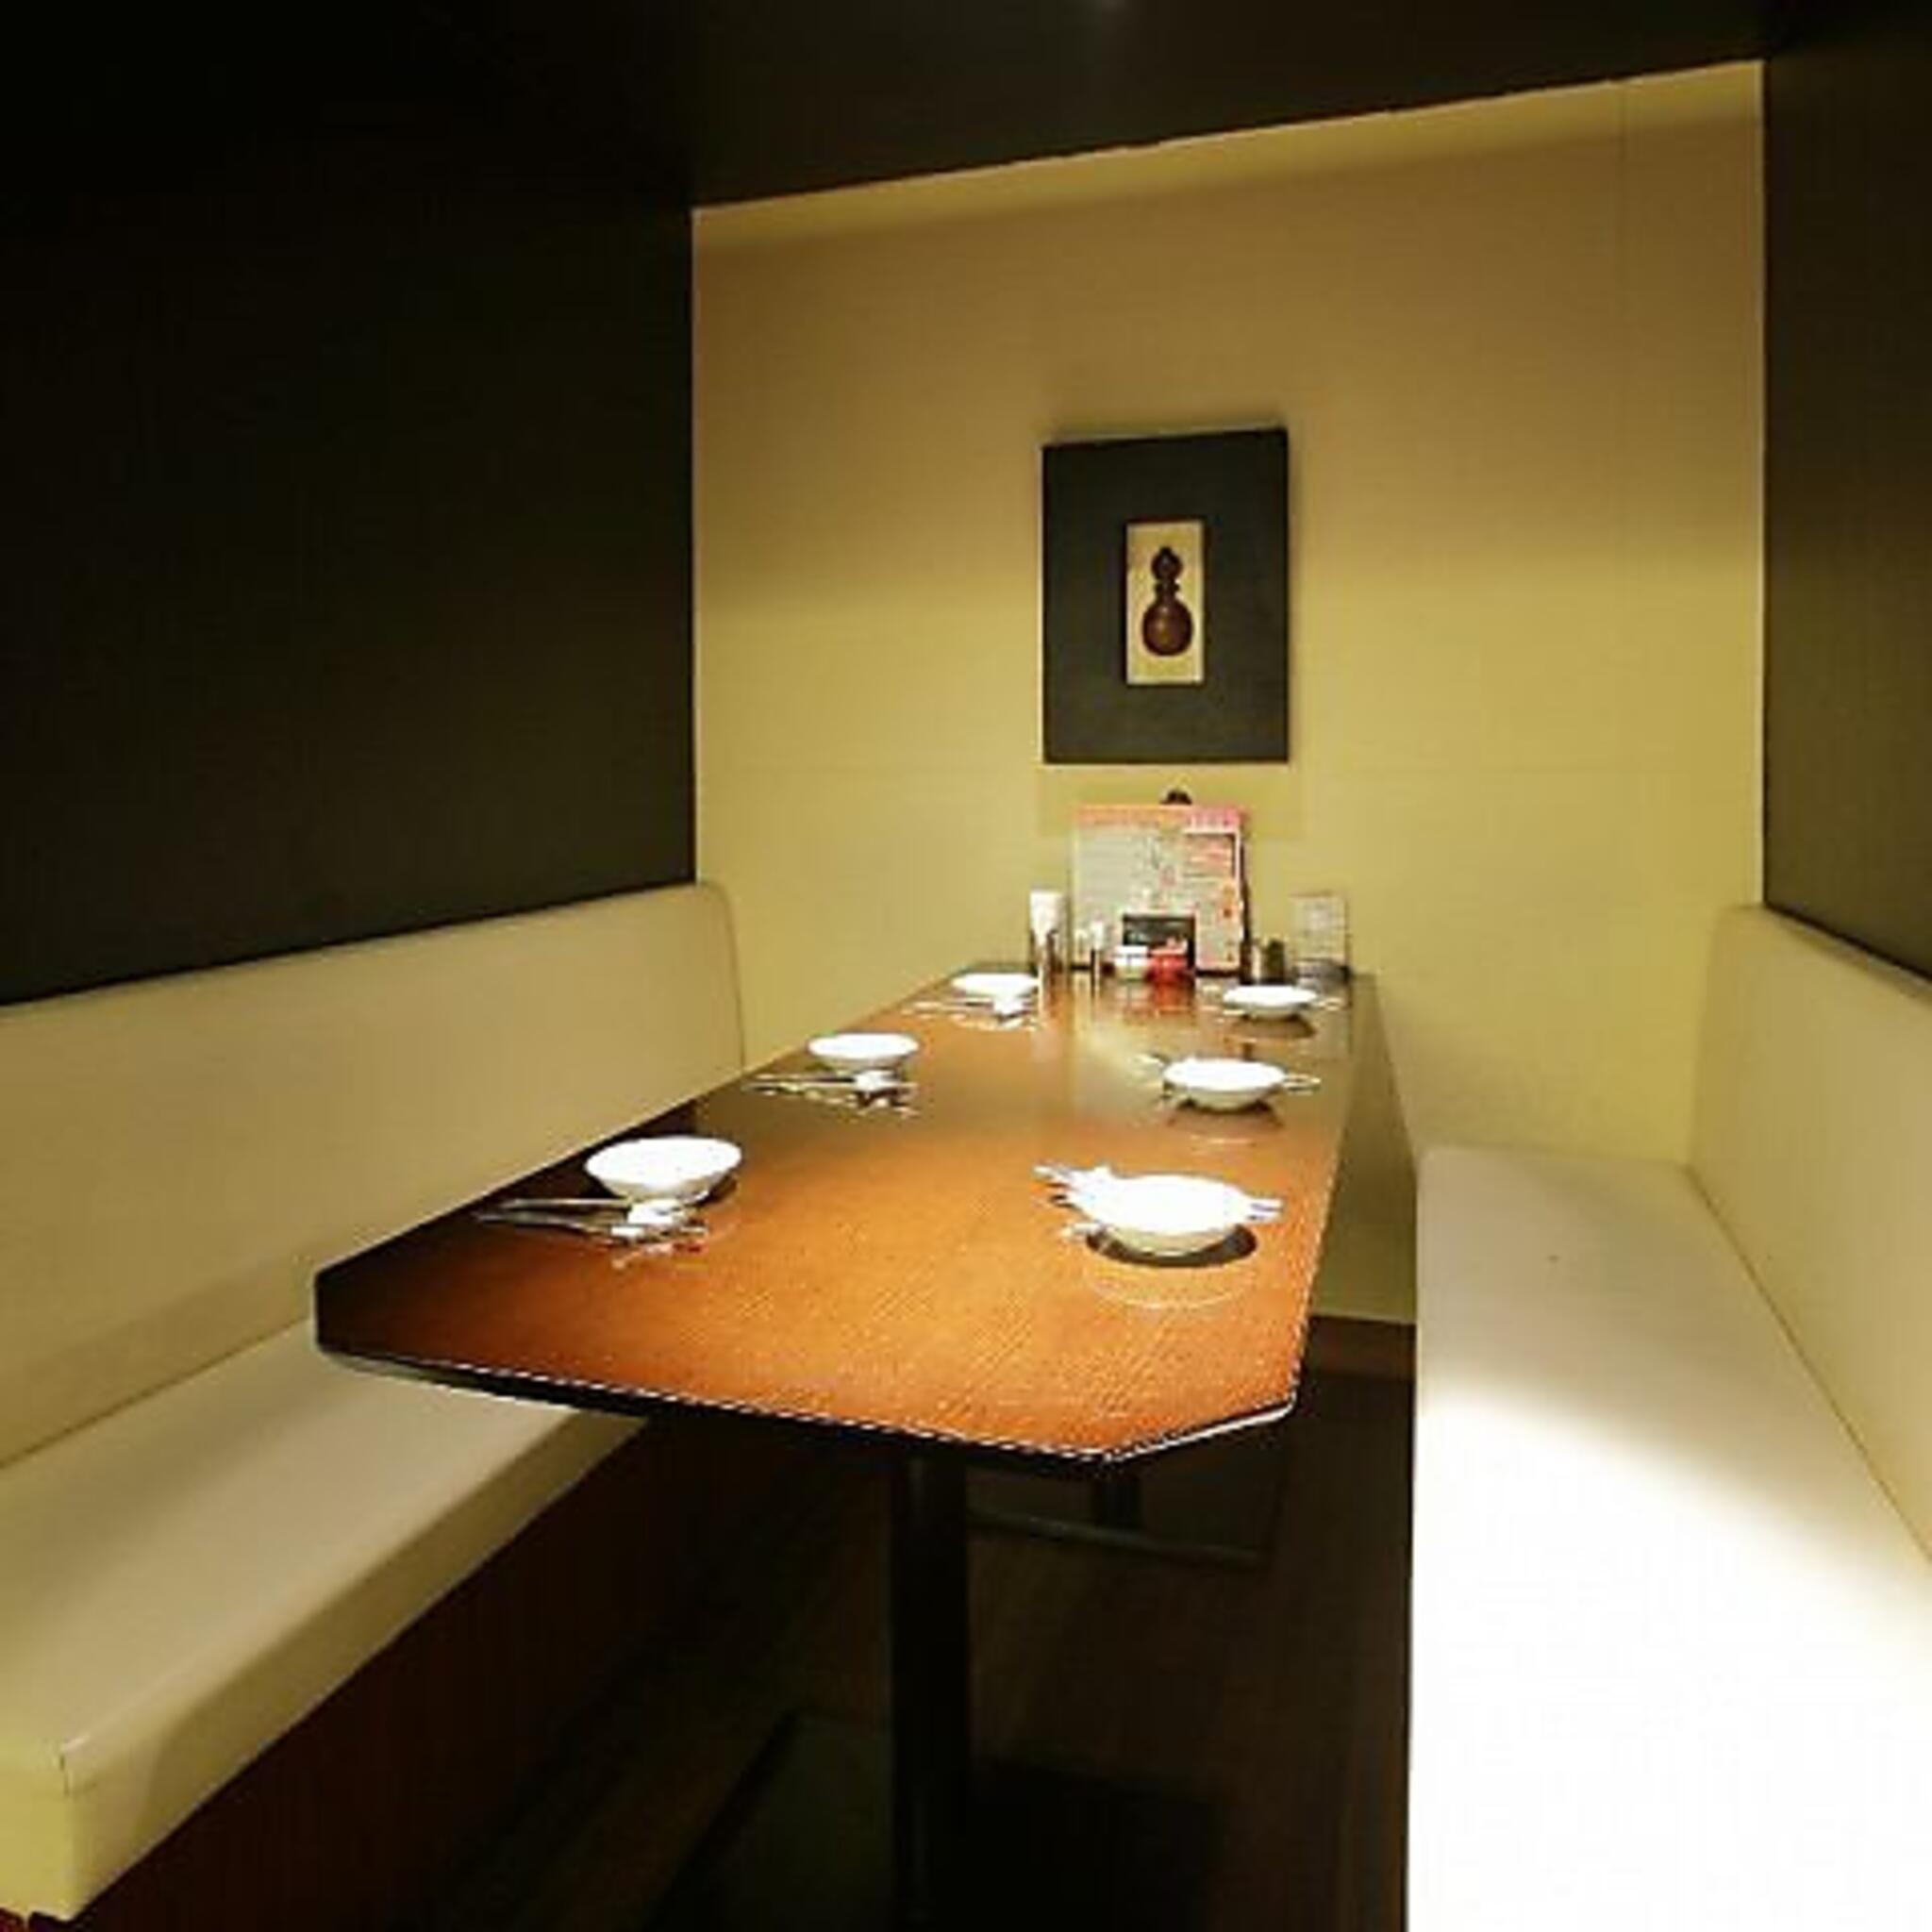 KOREAN DINING 長寿韓酒房 仙台店の代表写真2